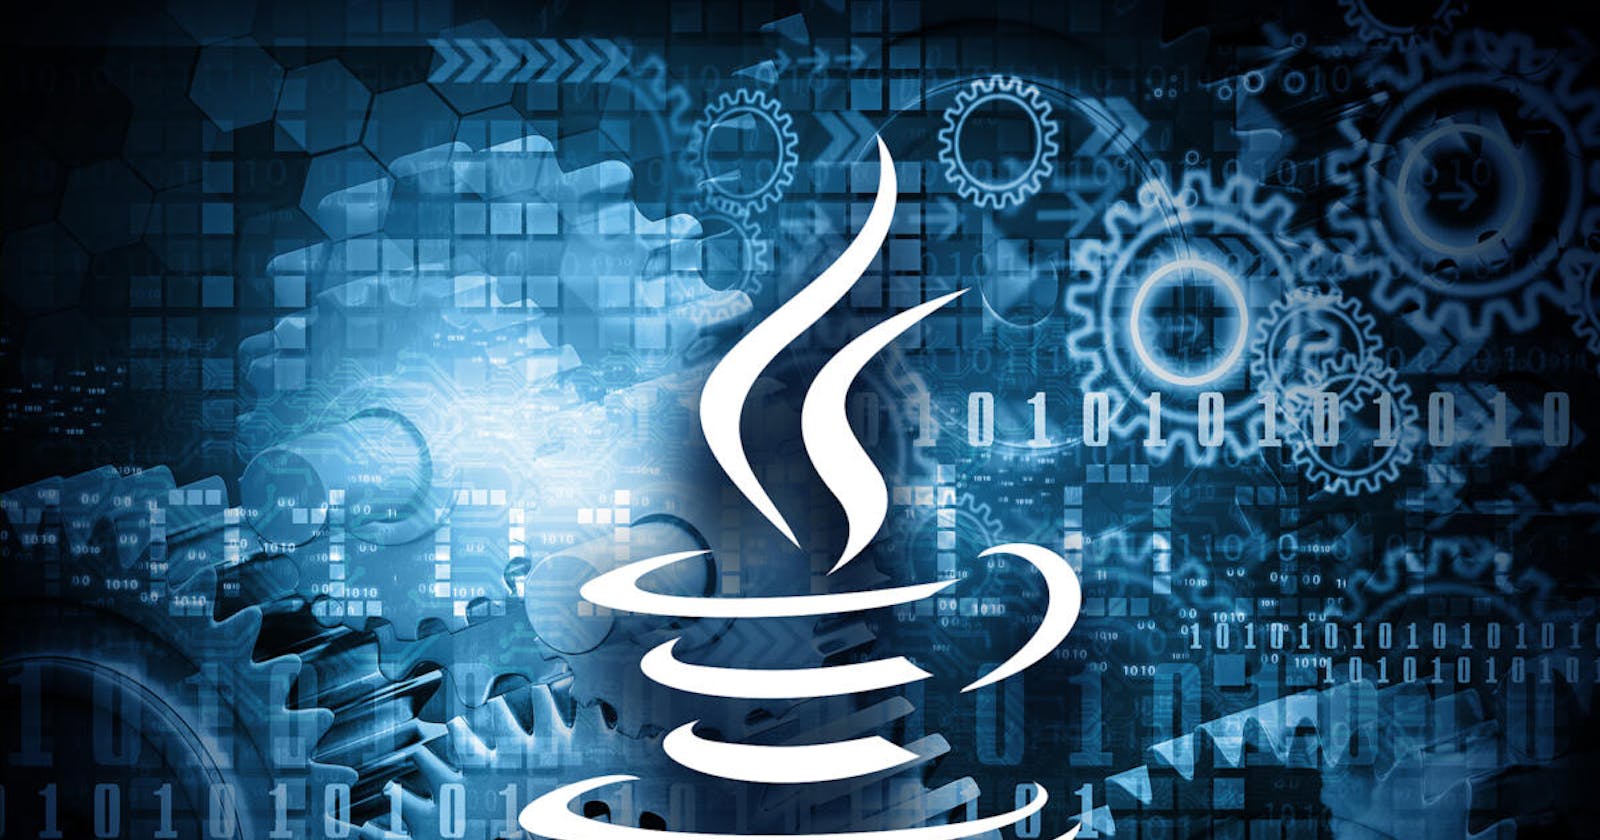 Java: Serialization and Deserialization